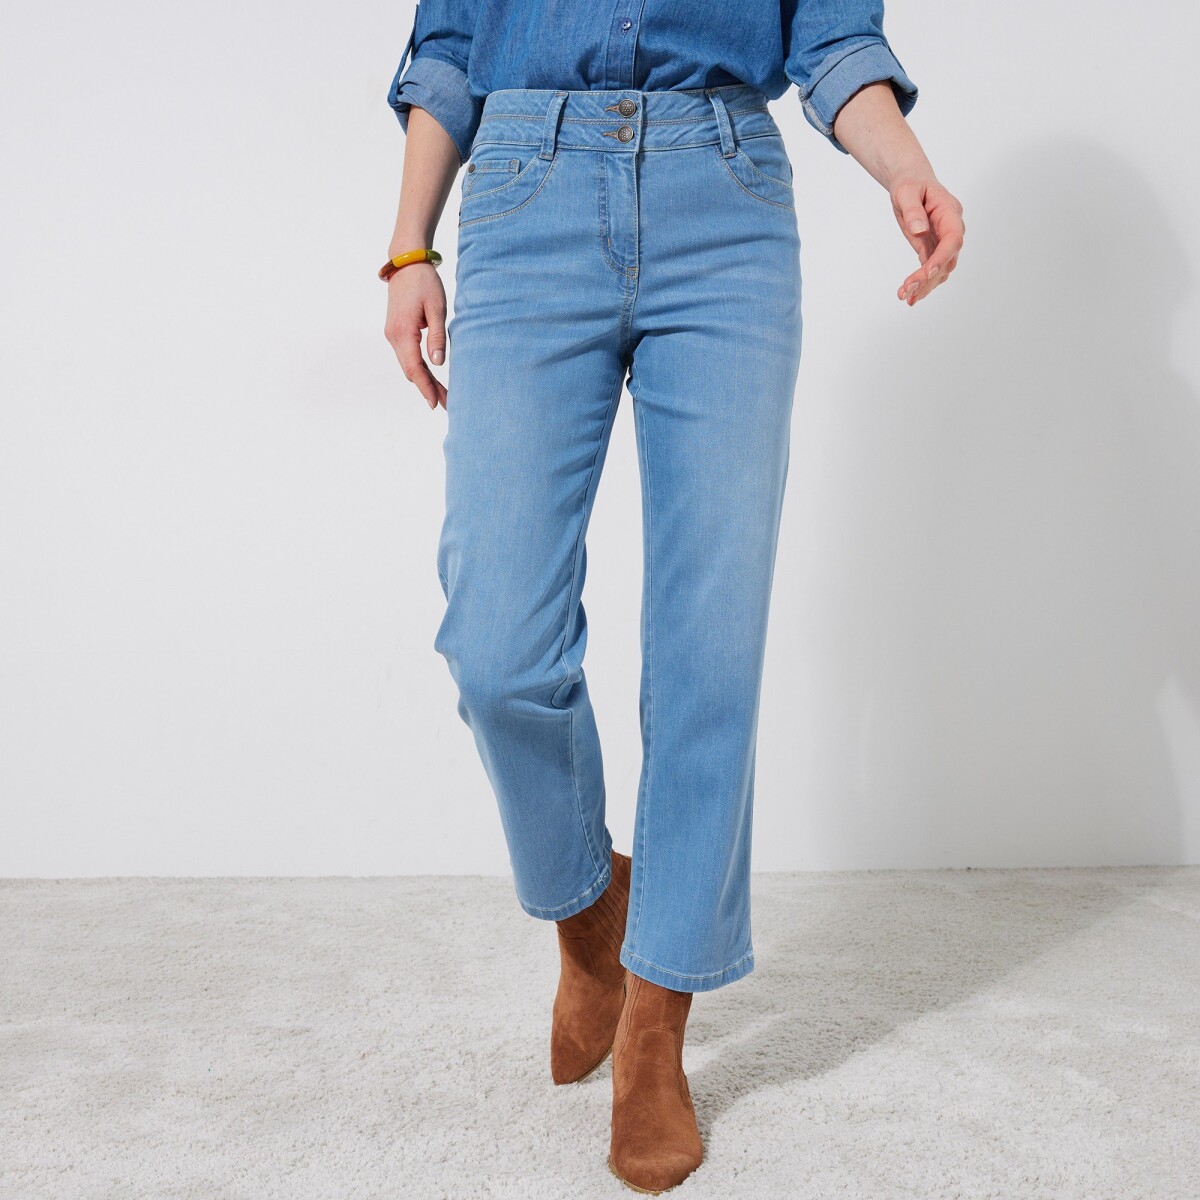 Rovné skrátené džínsy zapratá modrá 36